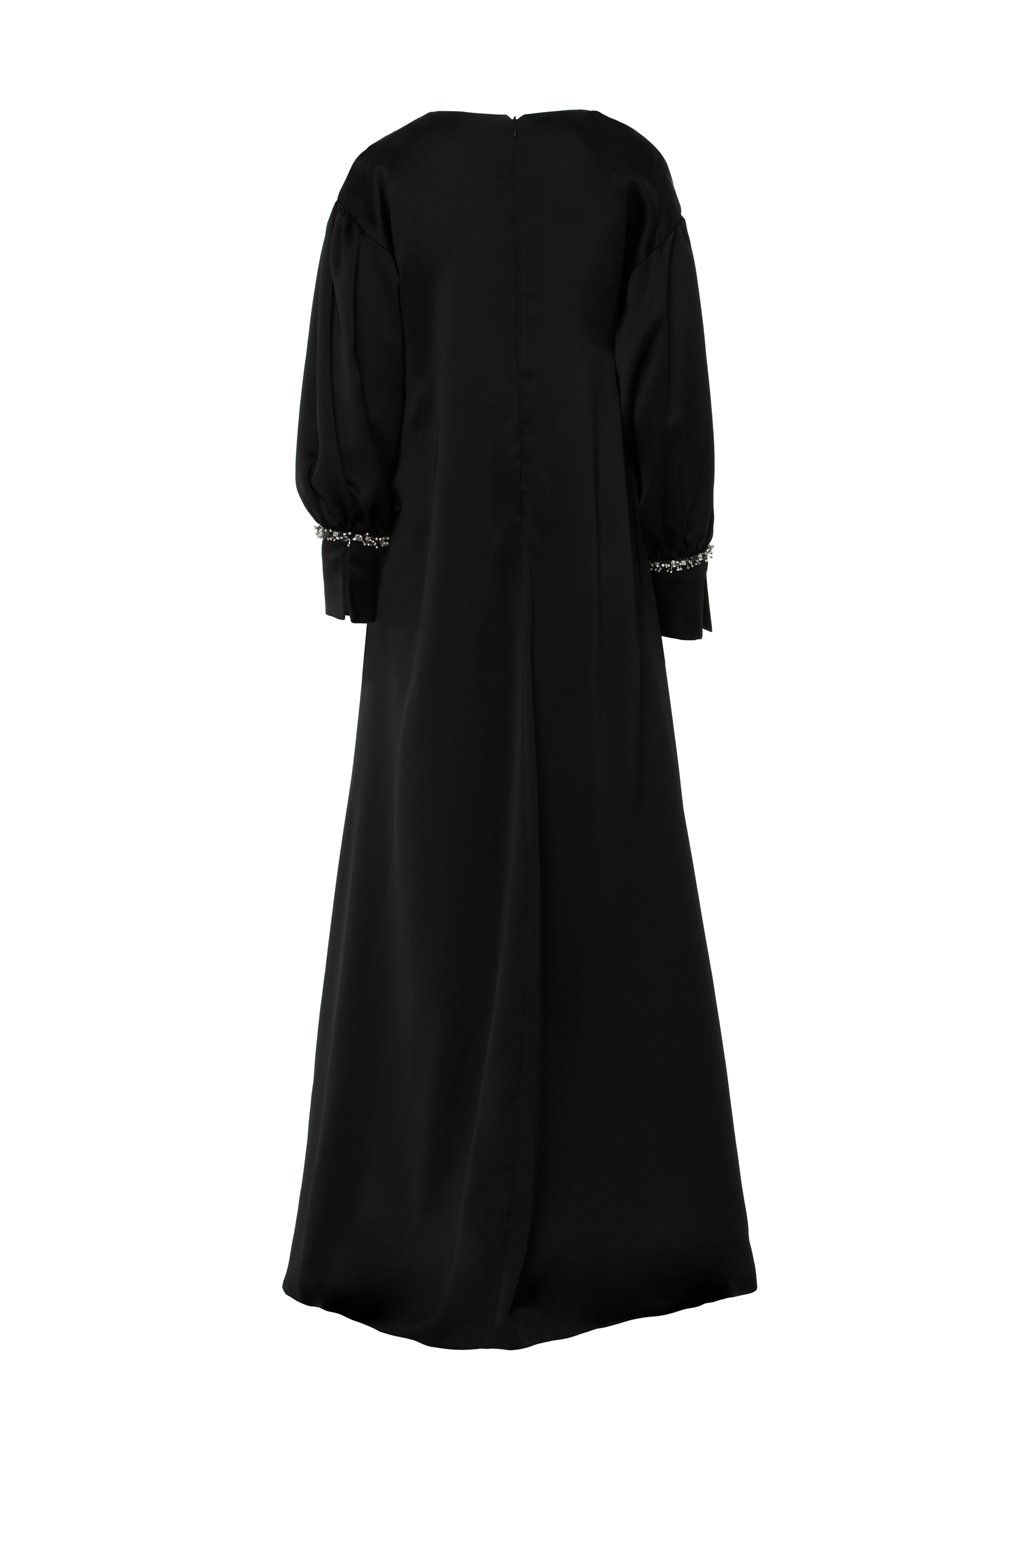 Bow Detailed V Neck Flowy Long Black Evening Dress